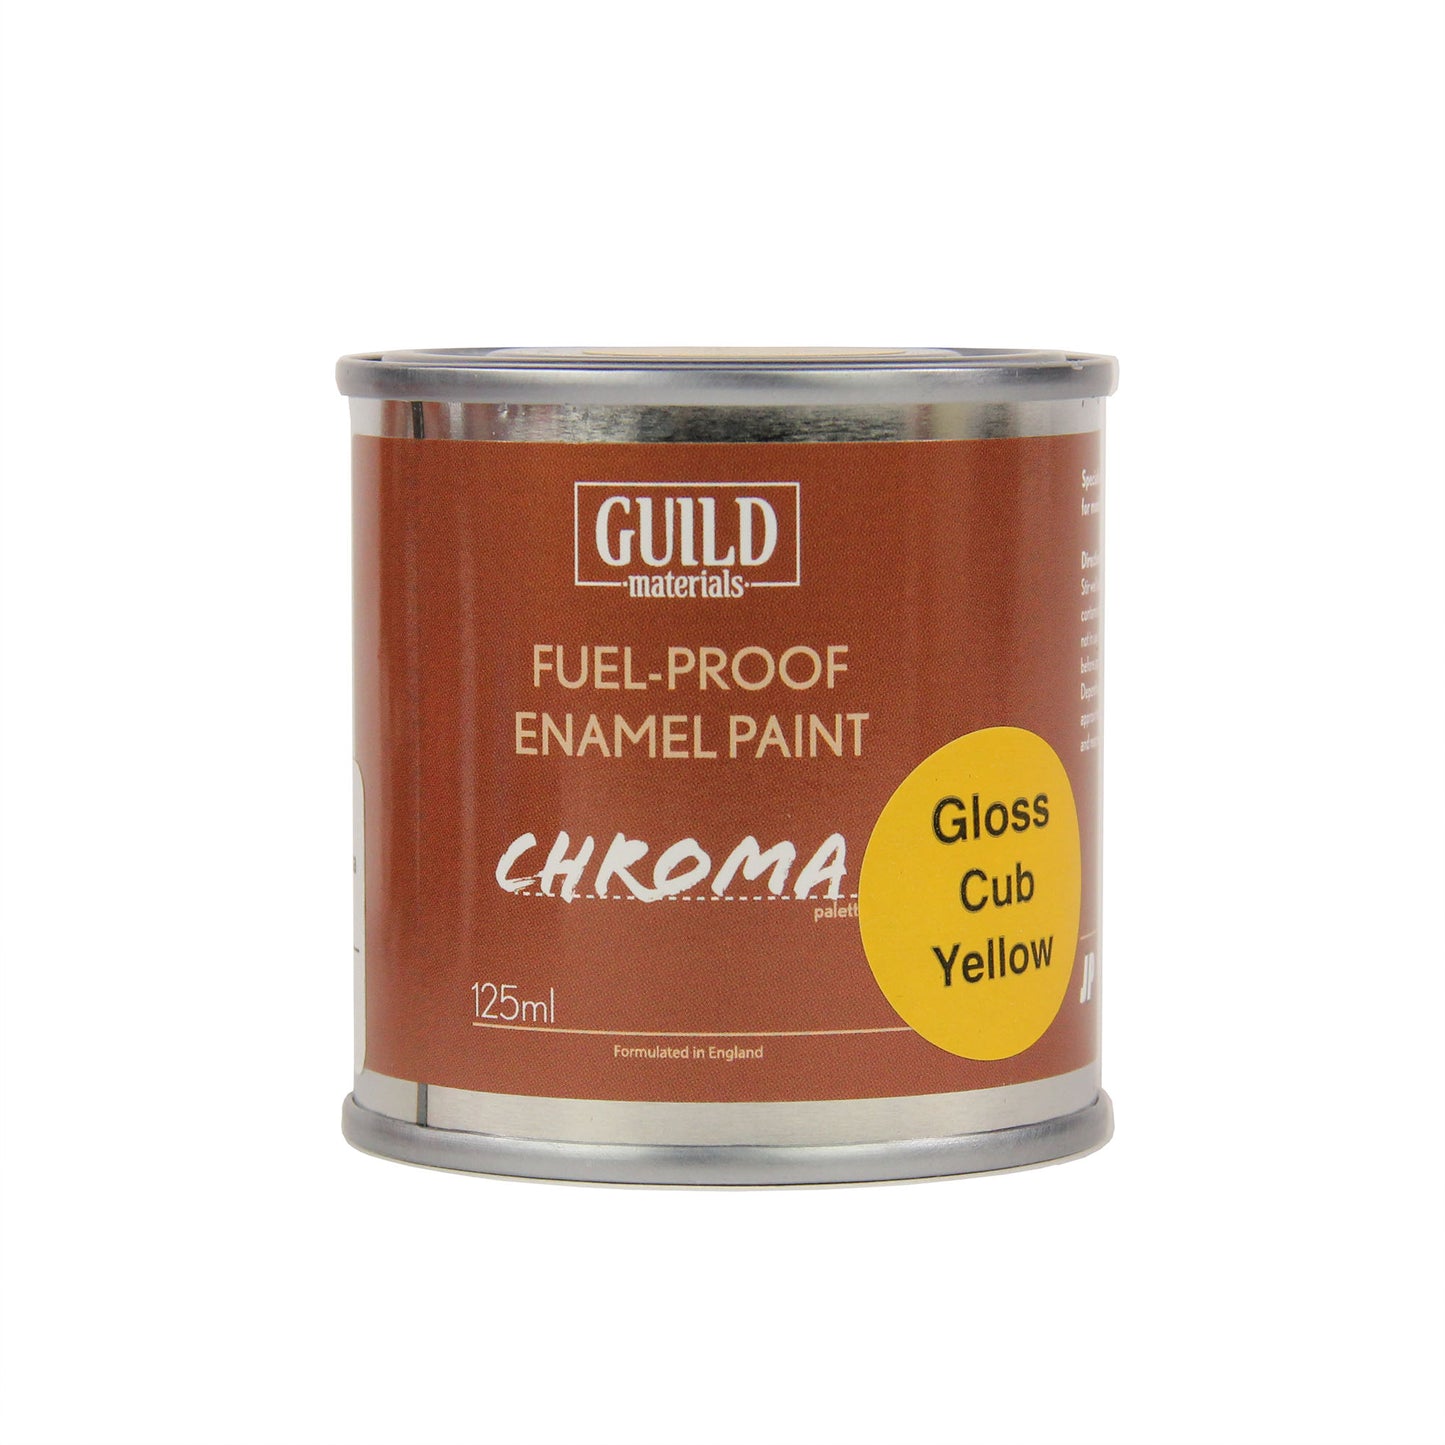 Chroma Enamel Fuelproof Paint Gloss Cub Yellow (125ml Tin)